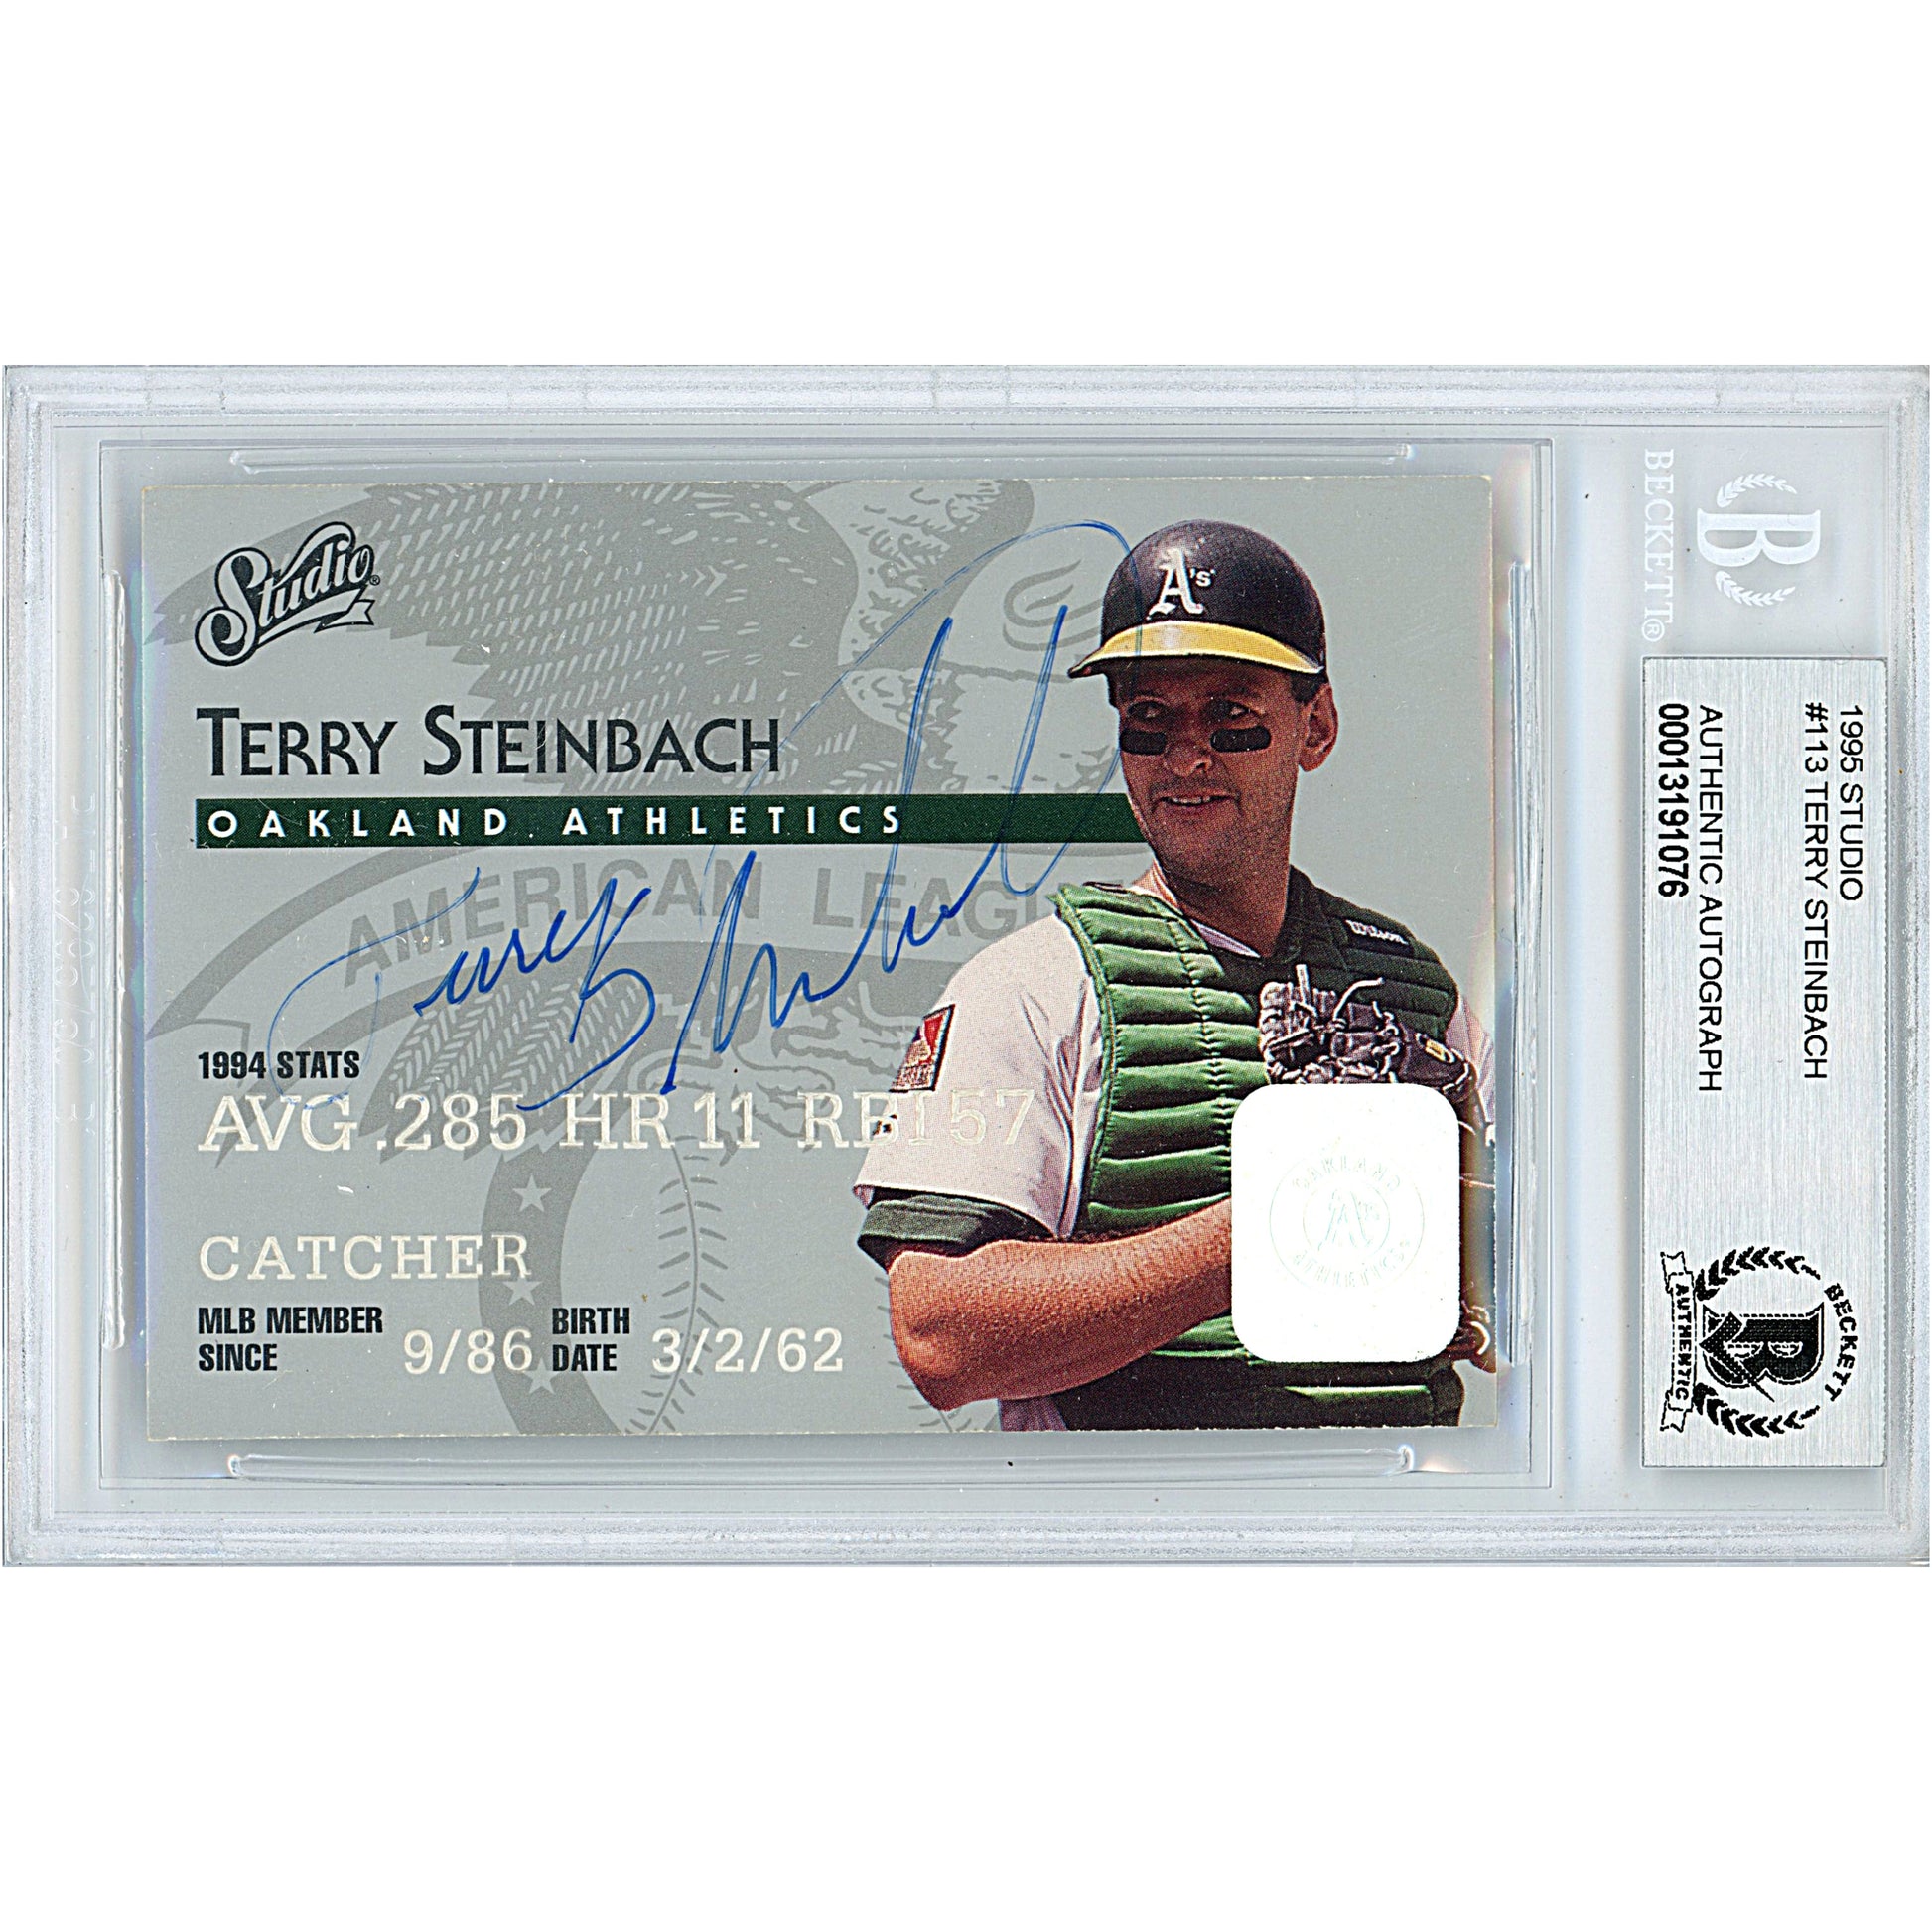 Baseballs- Autographed- Terry Steinbach Signed Oakland Athletics A's 1995 Studio Baseball Card Beckett BAS Slabbed 00013191076 - 101